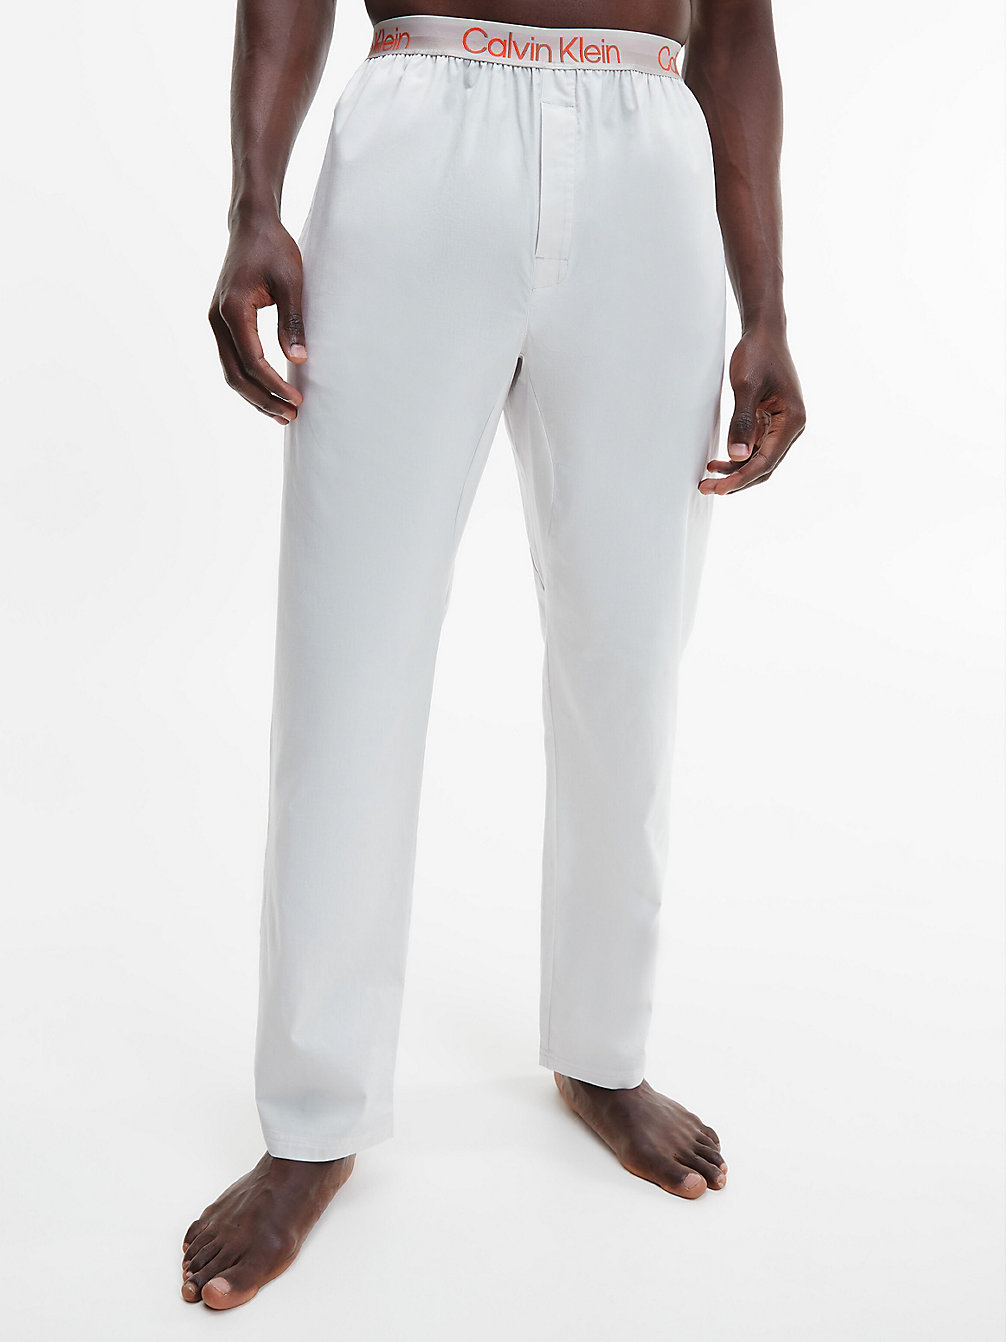 OCEAN STORM Pyjama Pants - Modern Structure undefined men Calvin Klein